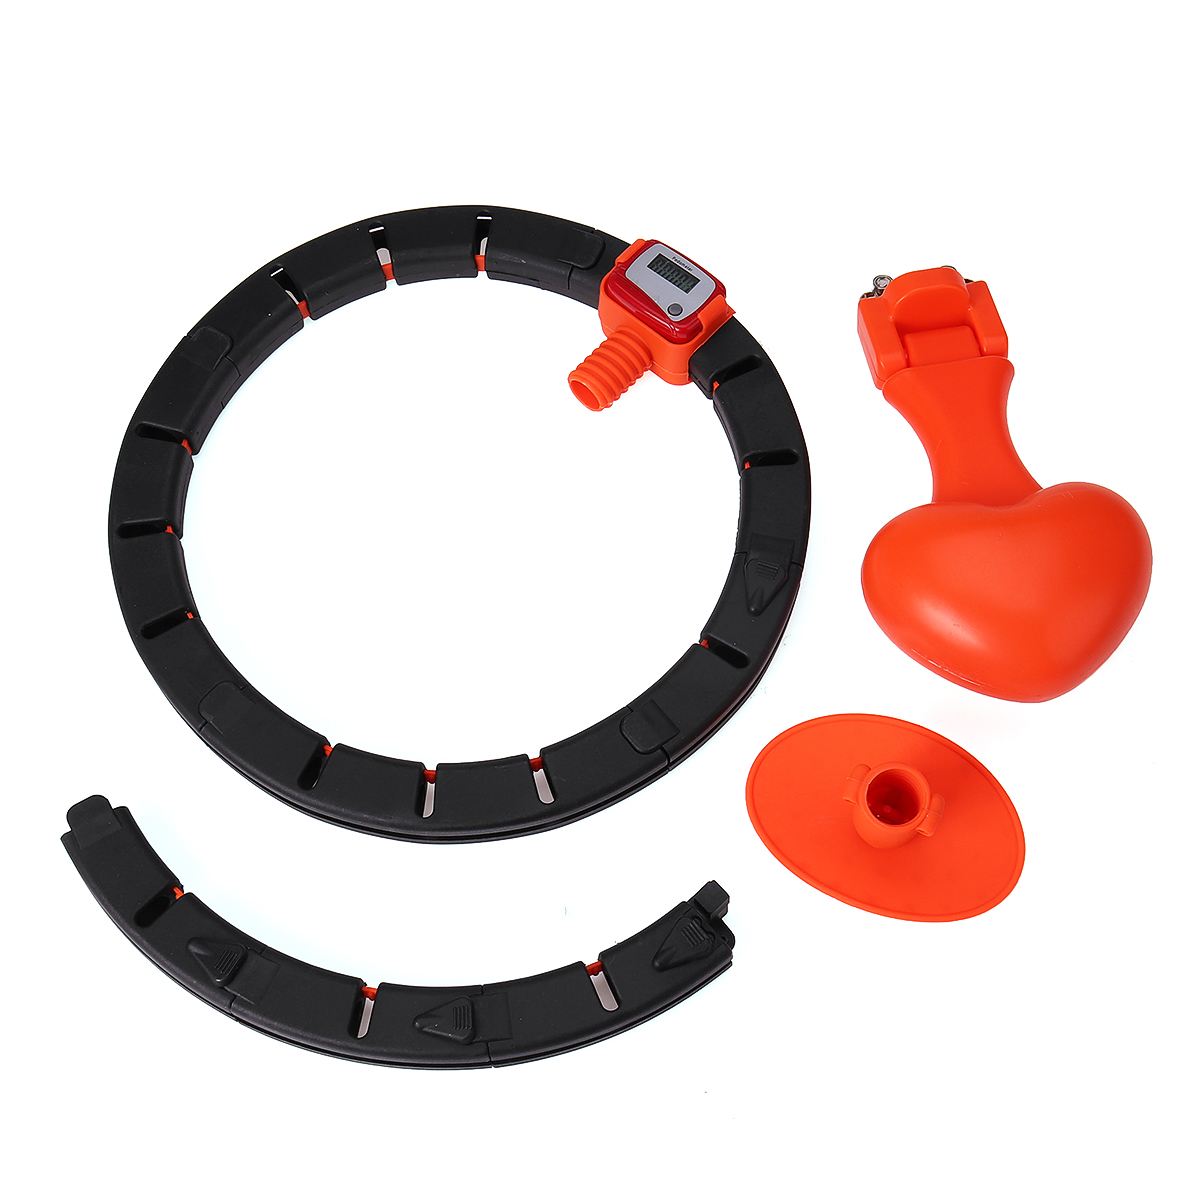 Detachable-360deg-Auto-Rotation-Portable-Smart-Fitness-Ring-wCounter-Home-Fitness-Body-Shaping-Slimm-1661437-3